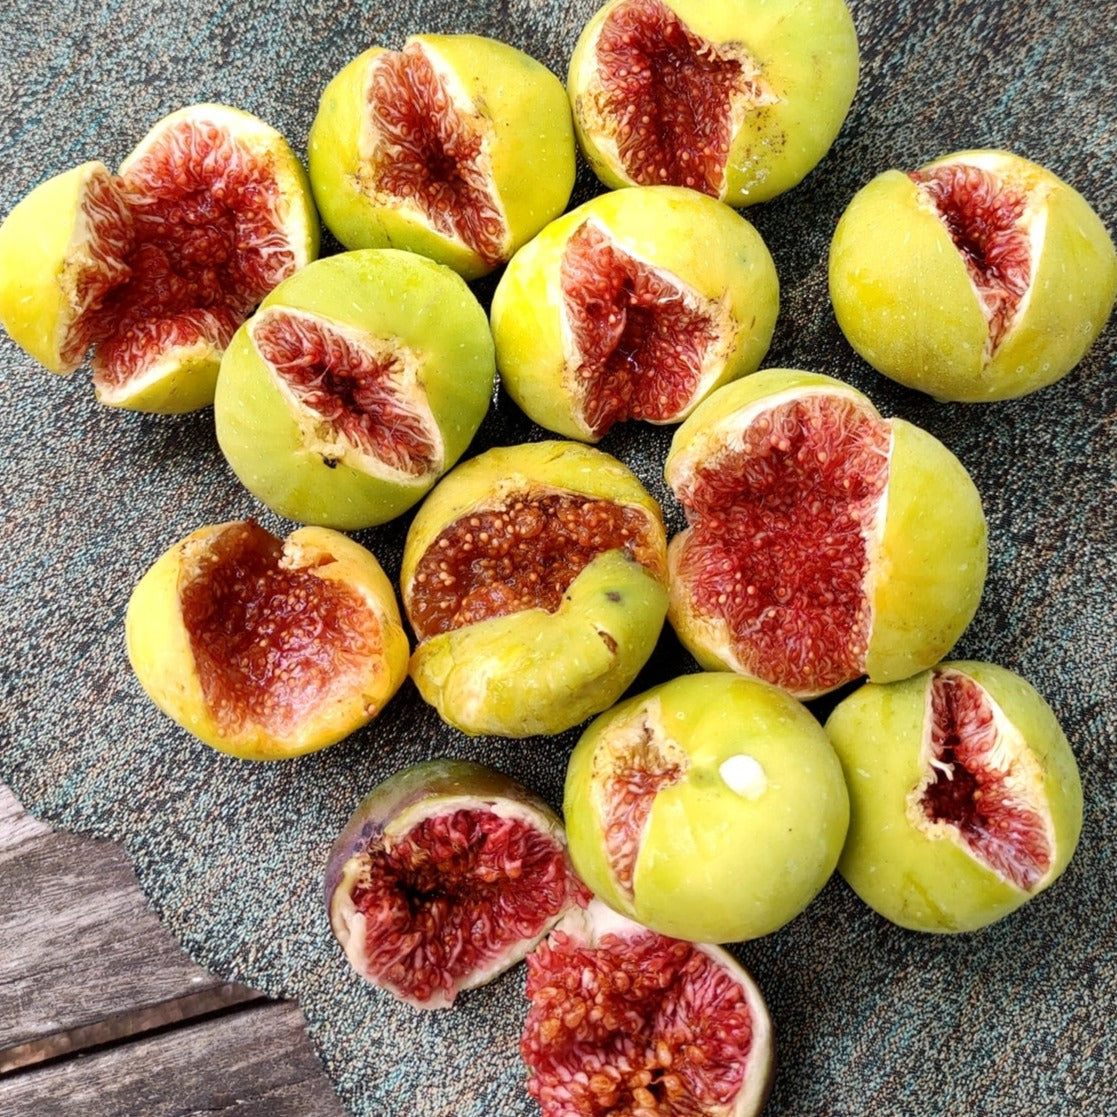 Yellow Turkey Fig Fruit Plant (Ficus carica 'Yellow Turkey”)